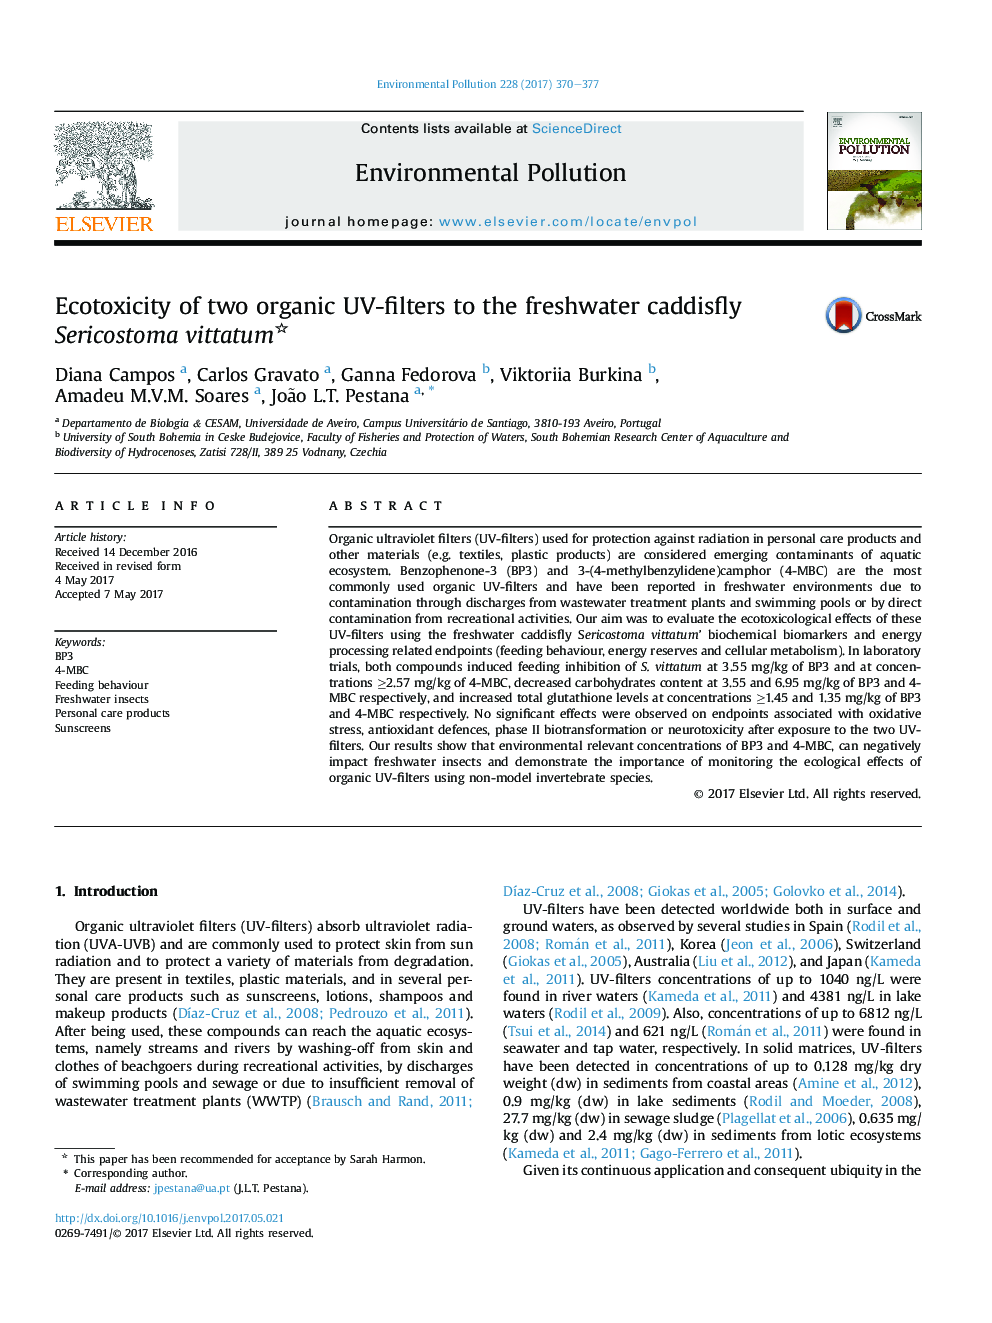 Ecotoxicity of two organic UV-filters to the freshwater caddisfly Sericostoma vittatum